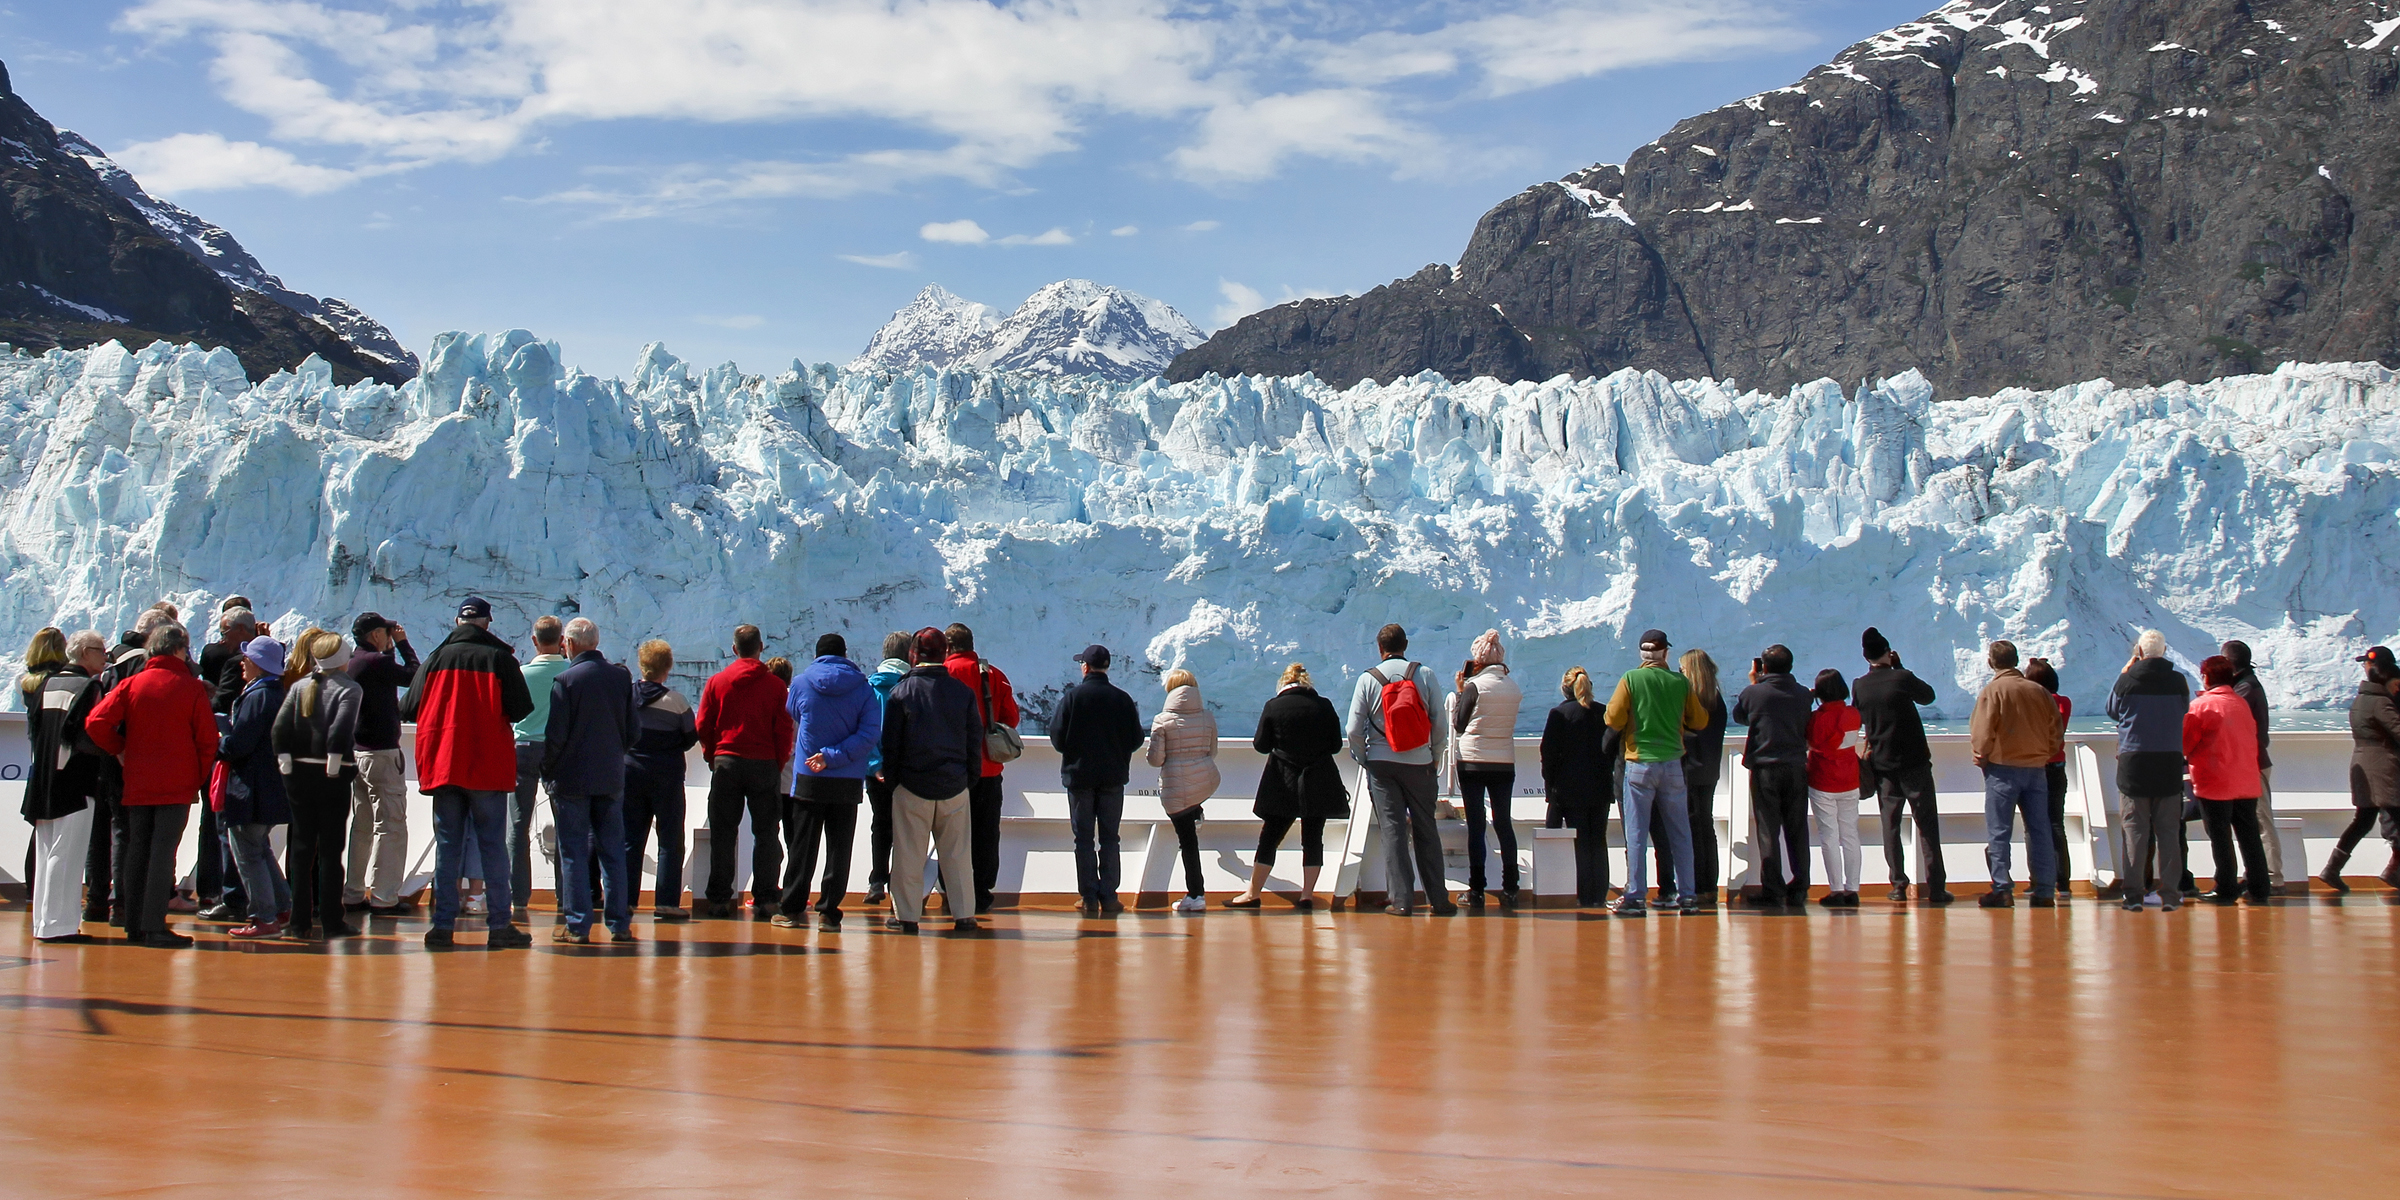 People gazing at a glacier in Alaska | Source: Shutterstock